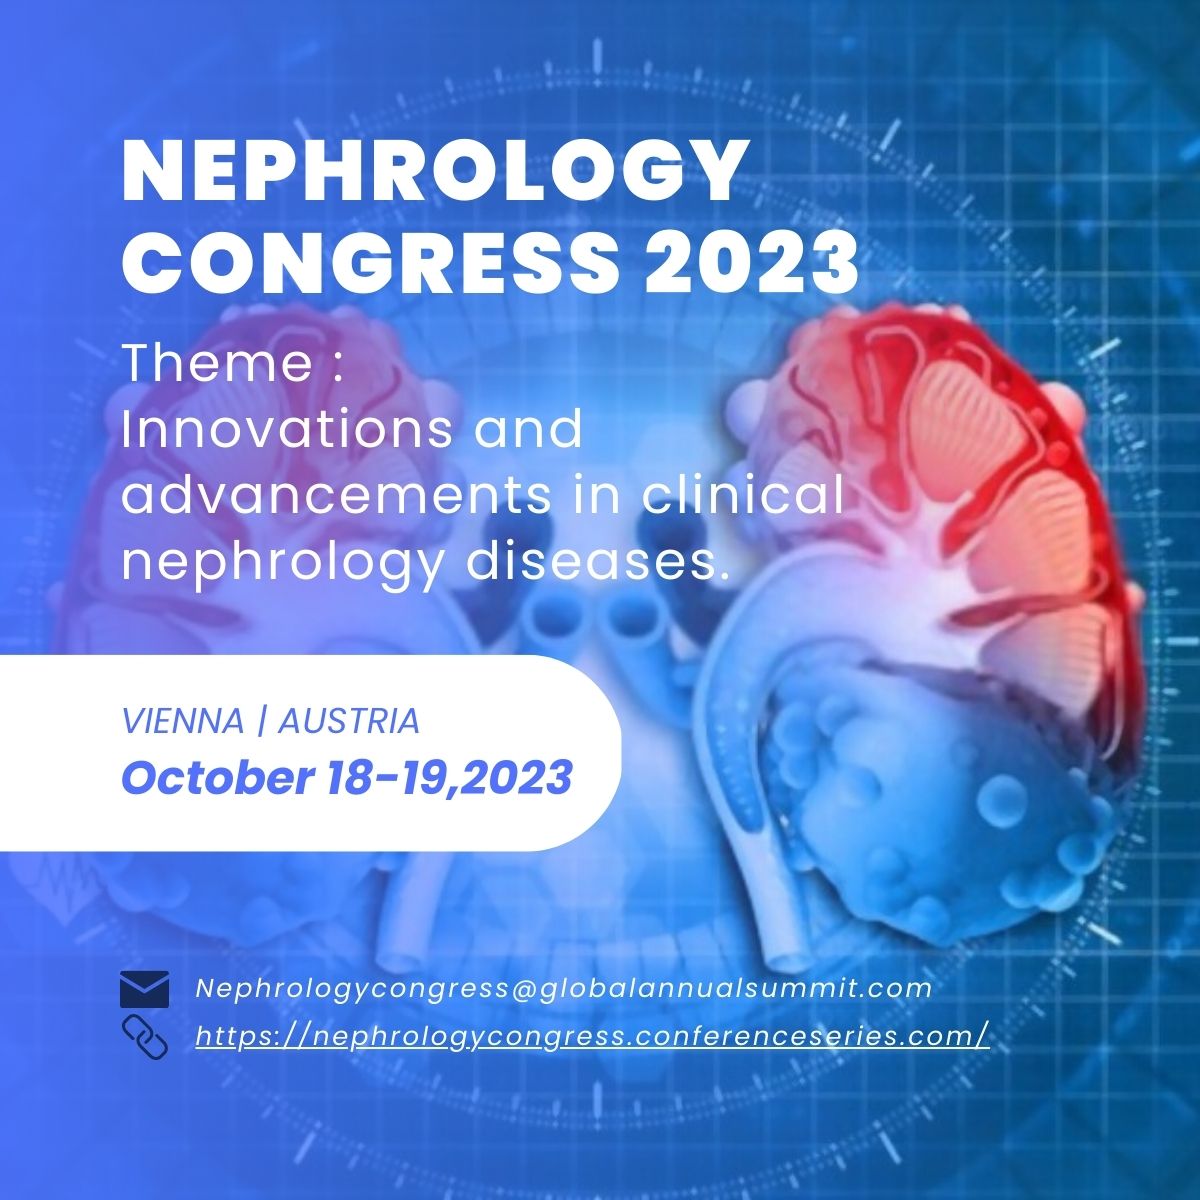 21st International Conference on Nephrology, Urology and Therapeutics, Vienna, Wien, Austria